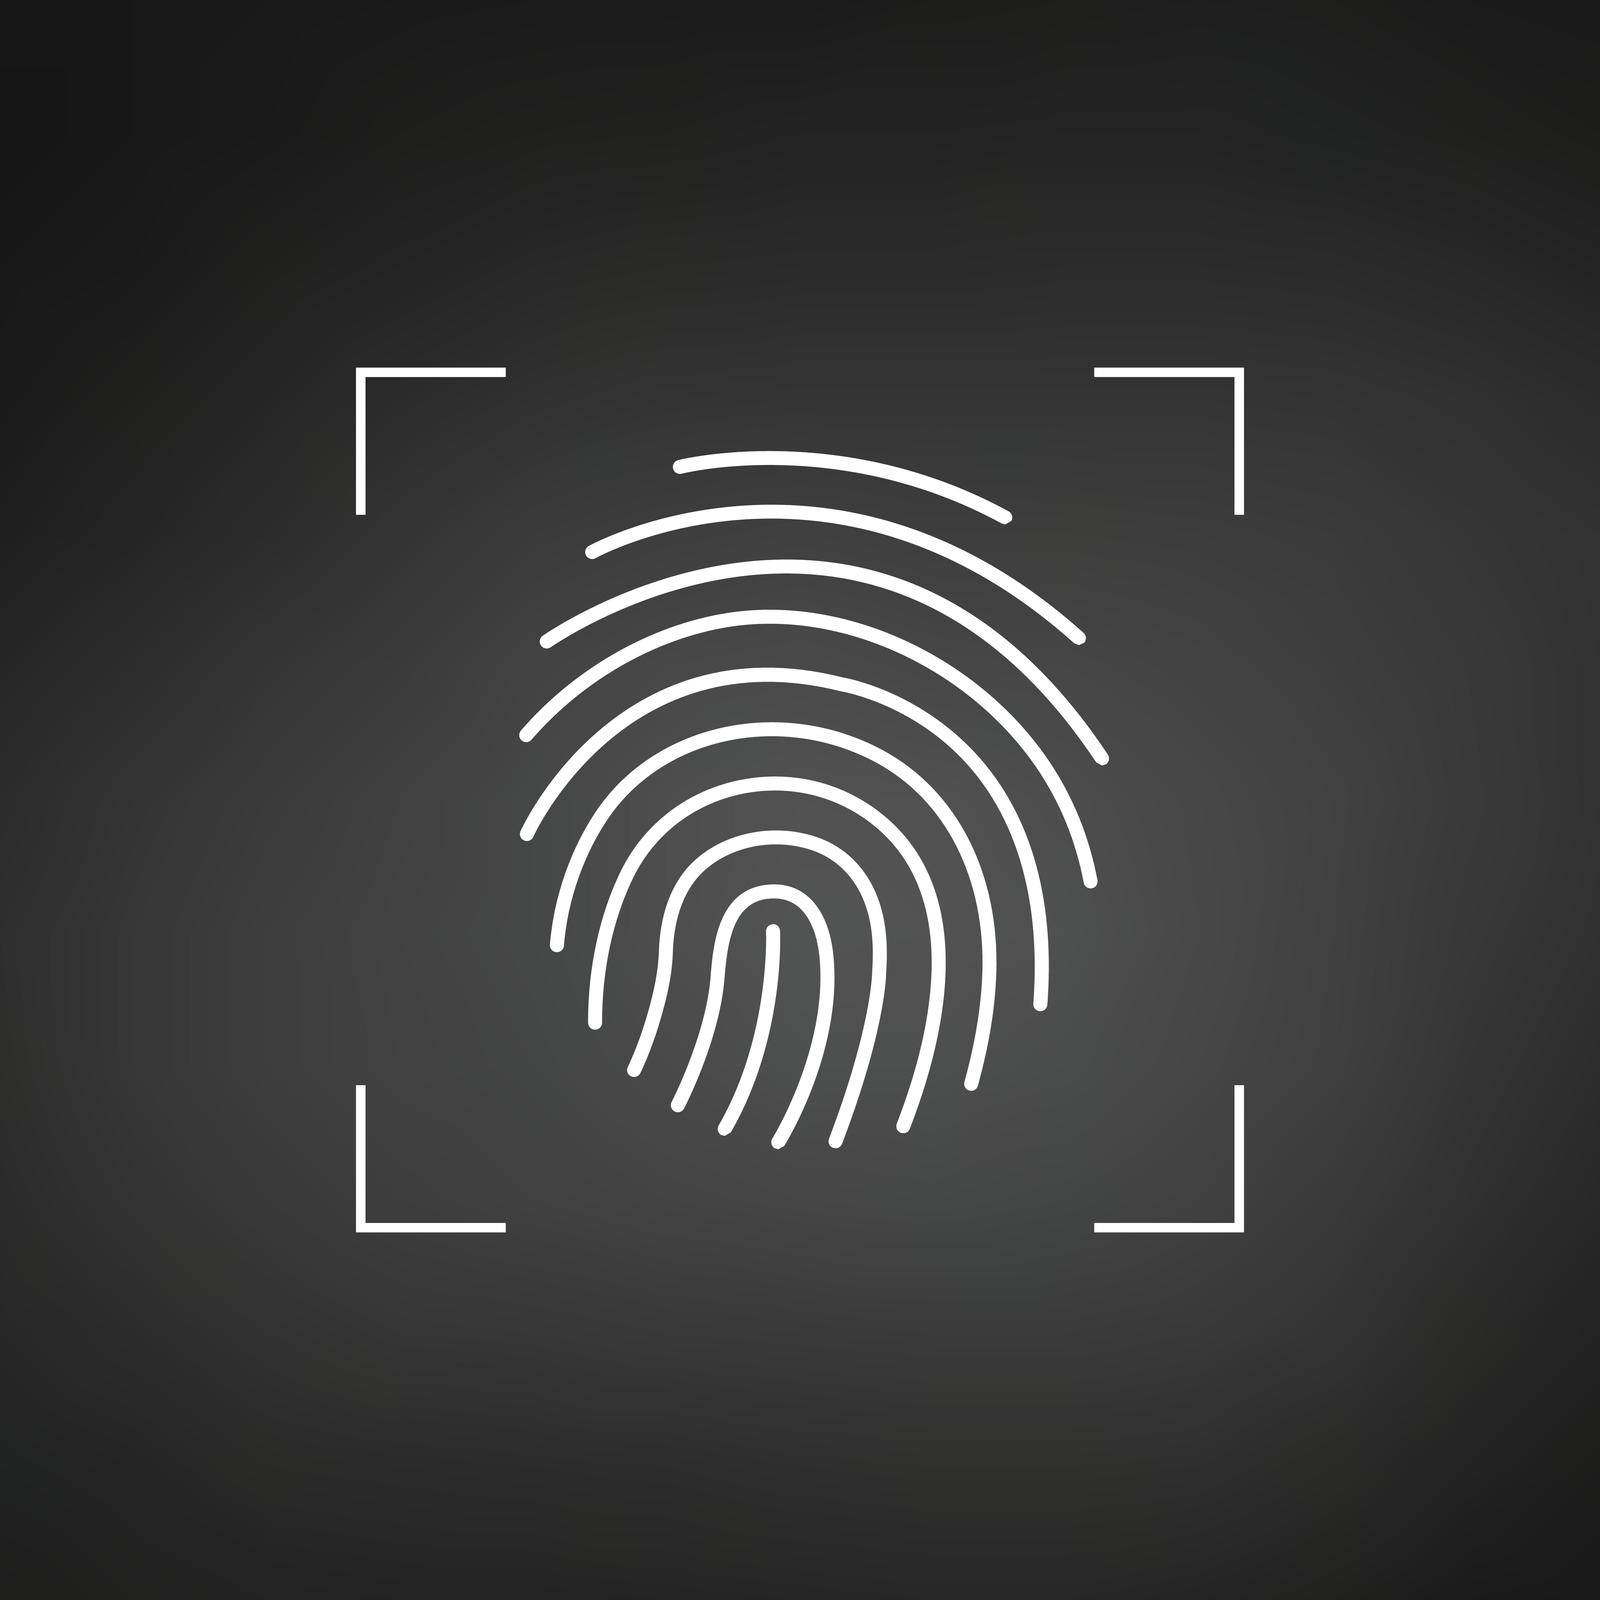 Fingerprint. Simple icon for logo or app. White object in camera autofocus on dark background. Scan frame. Vector illustration isolated on white